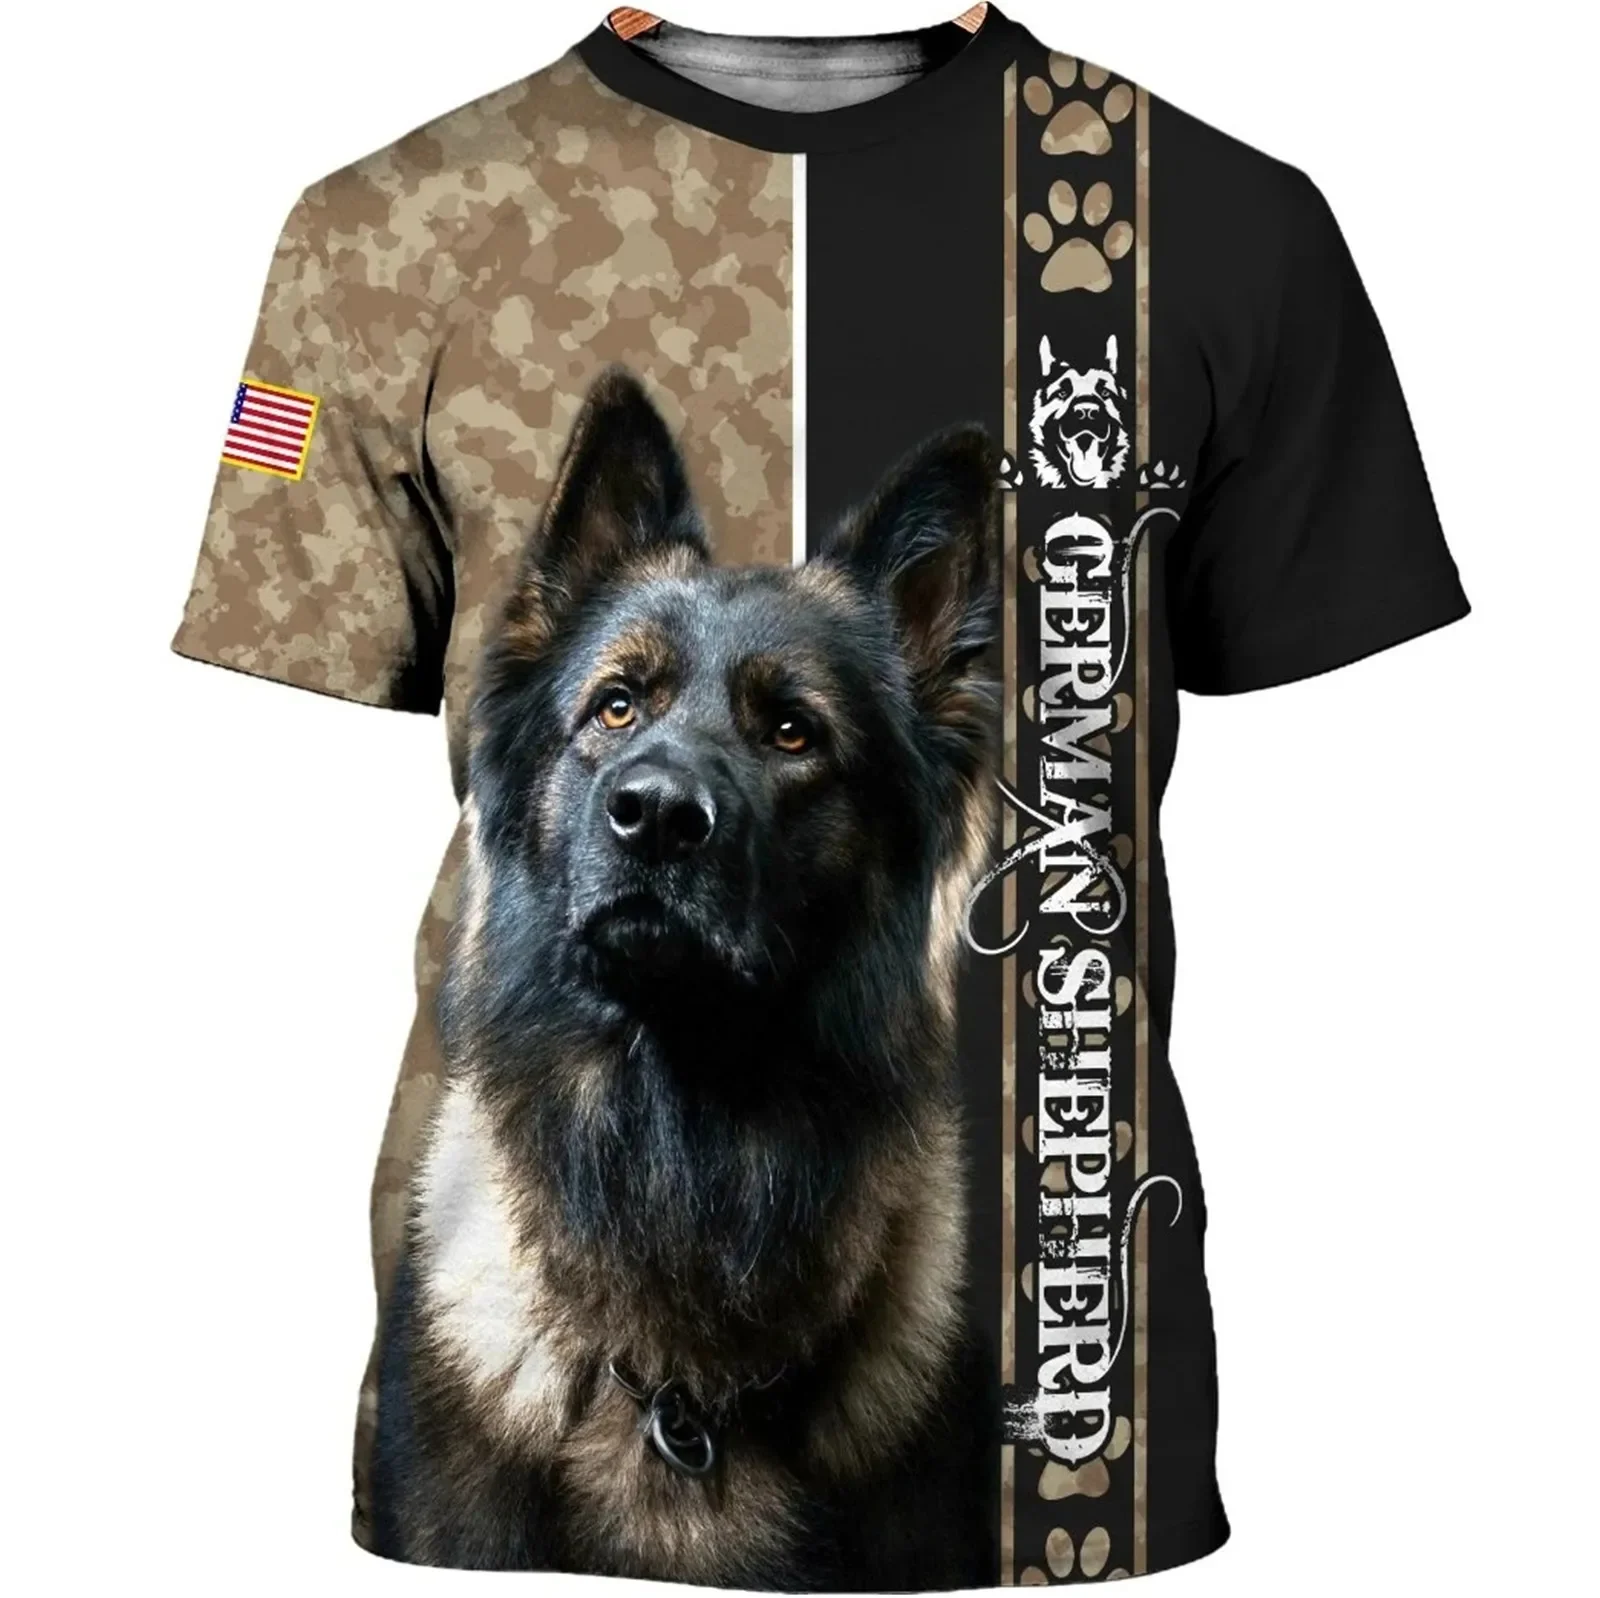 

HX Fashion Animal T-shirts German Shepherd 3D Printed T Shirts Funny Dog Tee Tops Short Sleeve Shirts Men Clothing Dropshipping